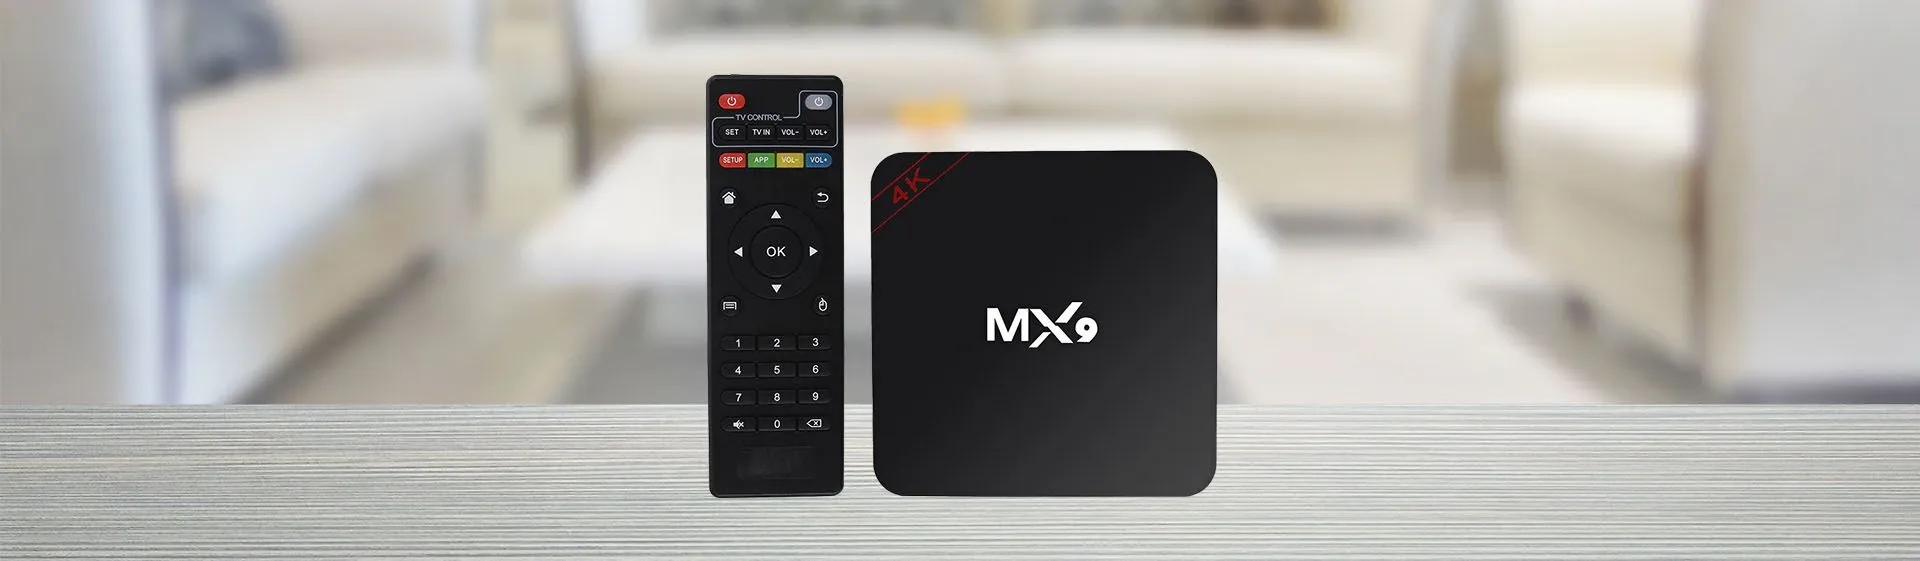 TV box MX9 é boa? Veja a análise da ficha técnica